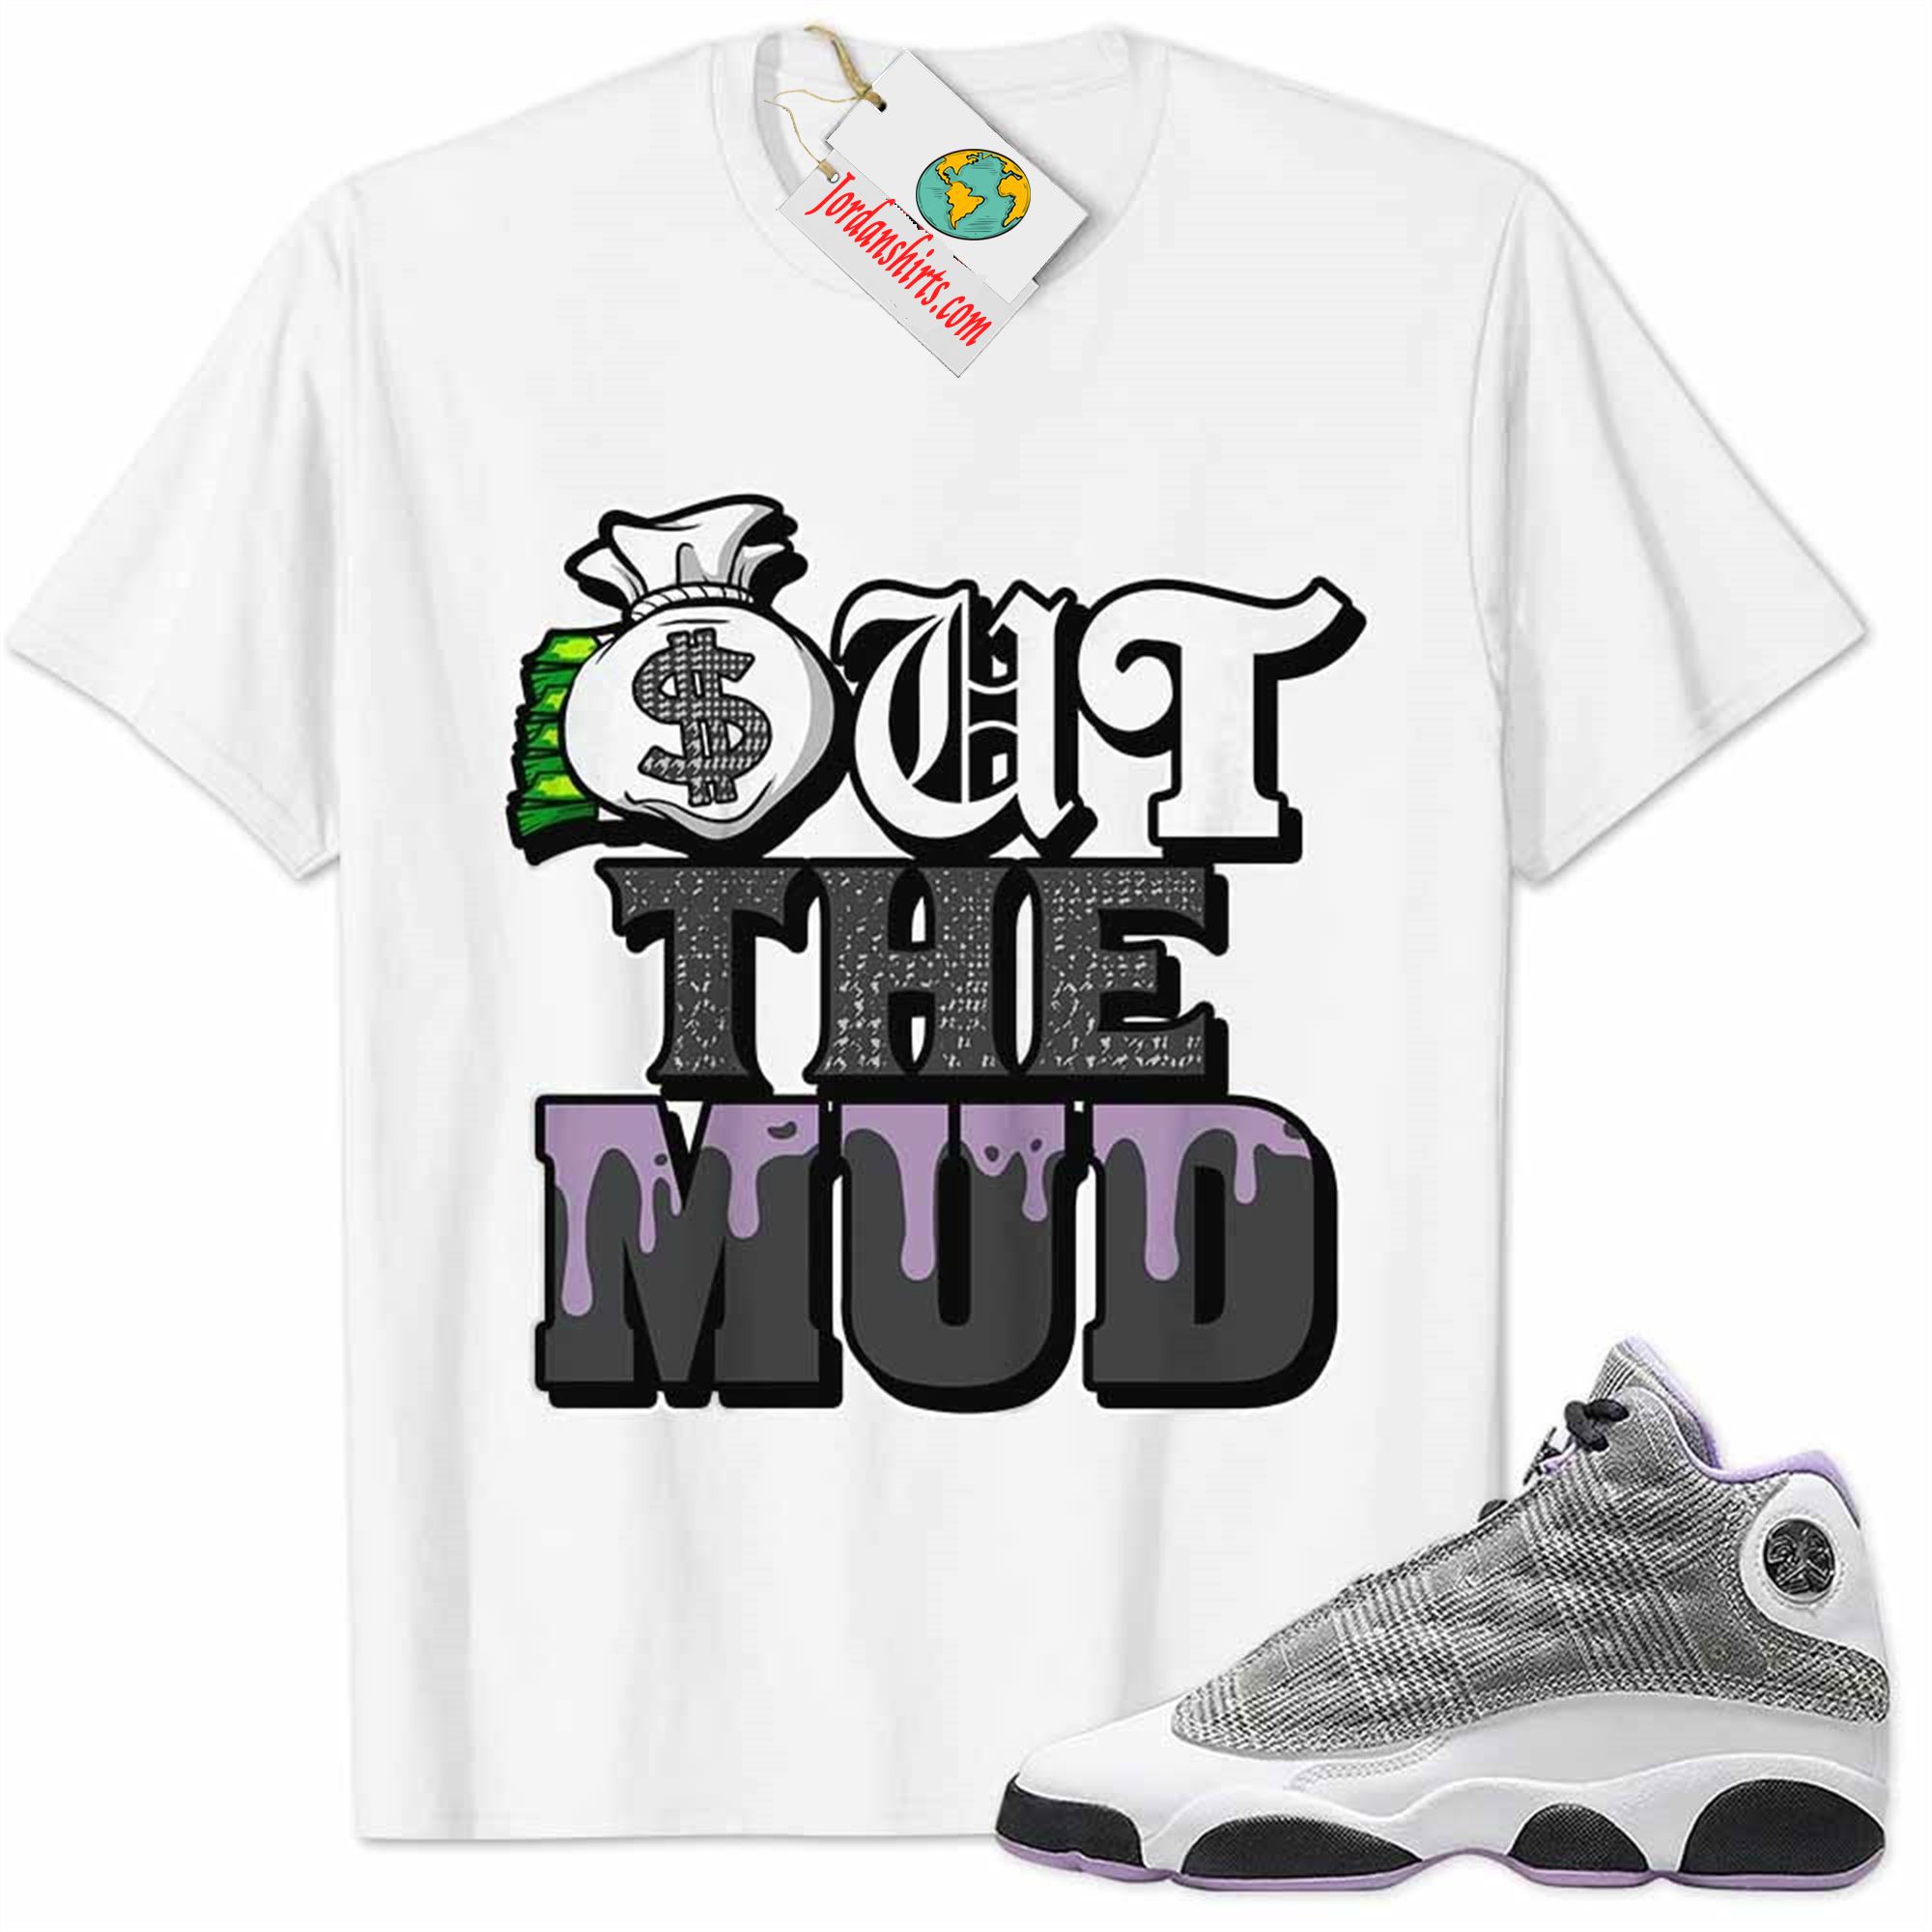 Jordan 13 Shirt, Jordan 13 Houndstooth Shirt Out The Mud Money Bag White Plus Size Up To 5xl